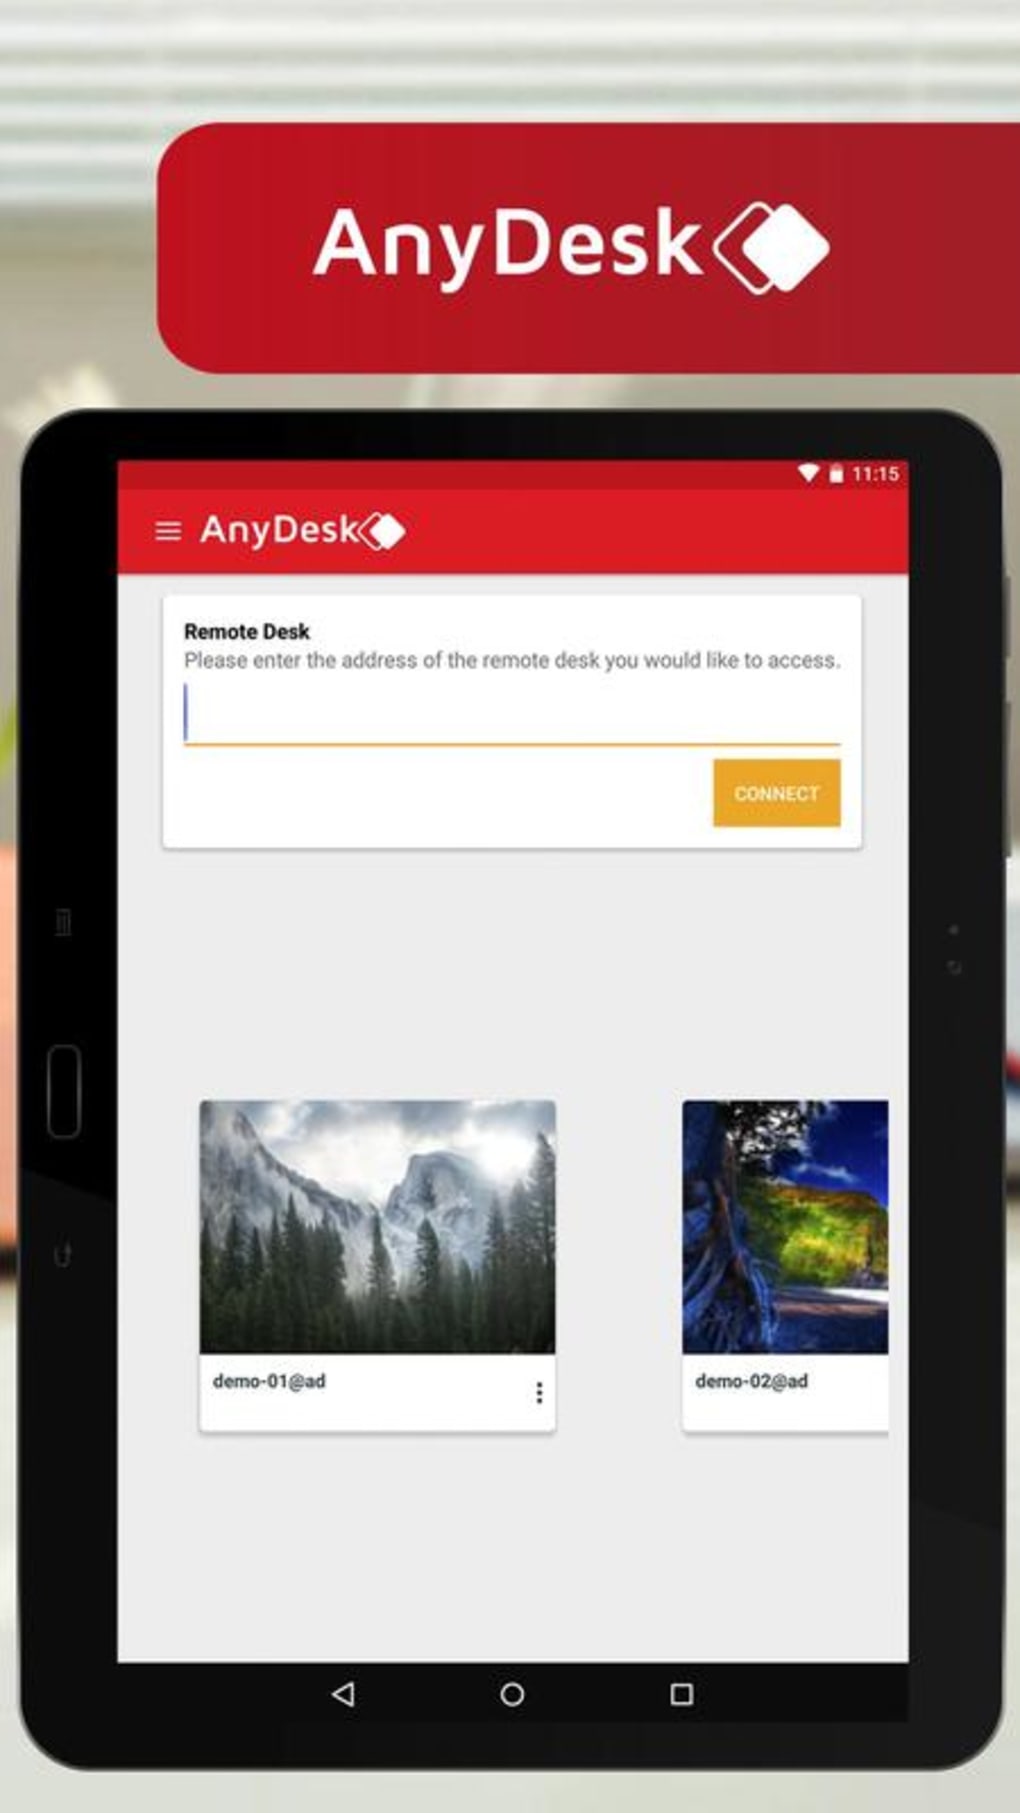 AnyDesk Remote Desktop for Android - Download